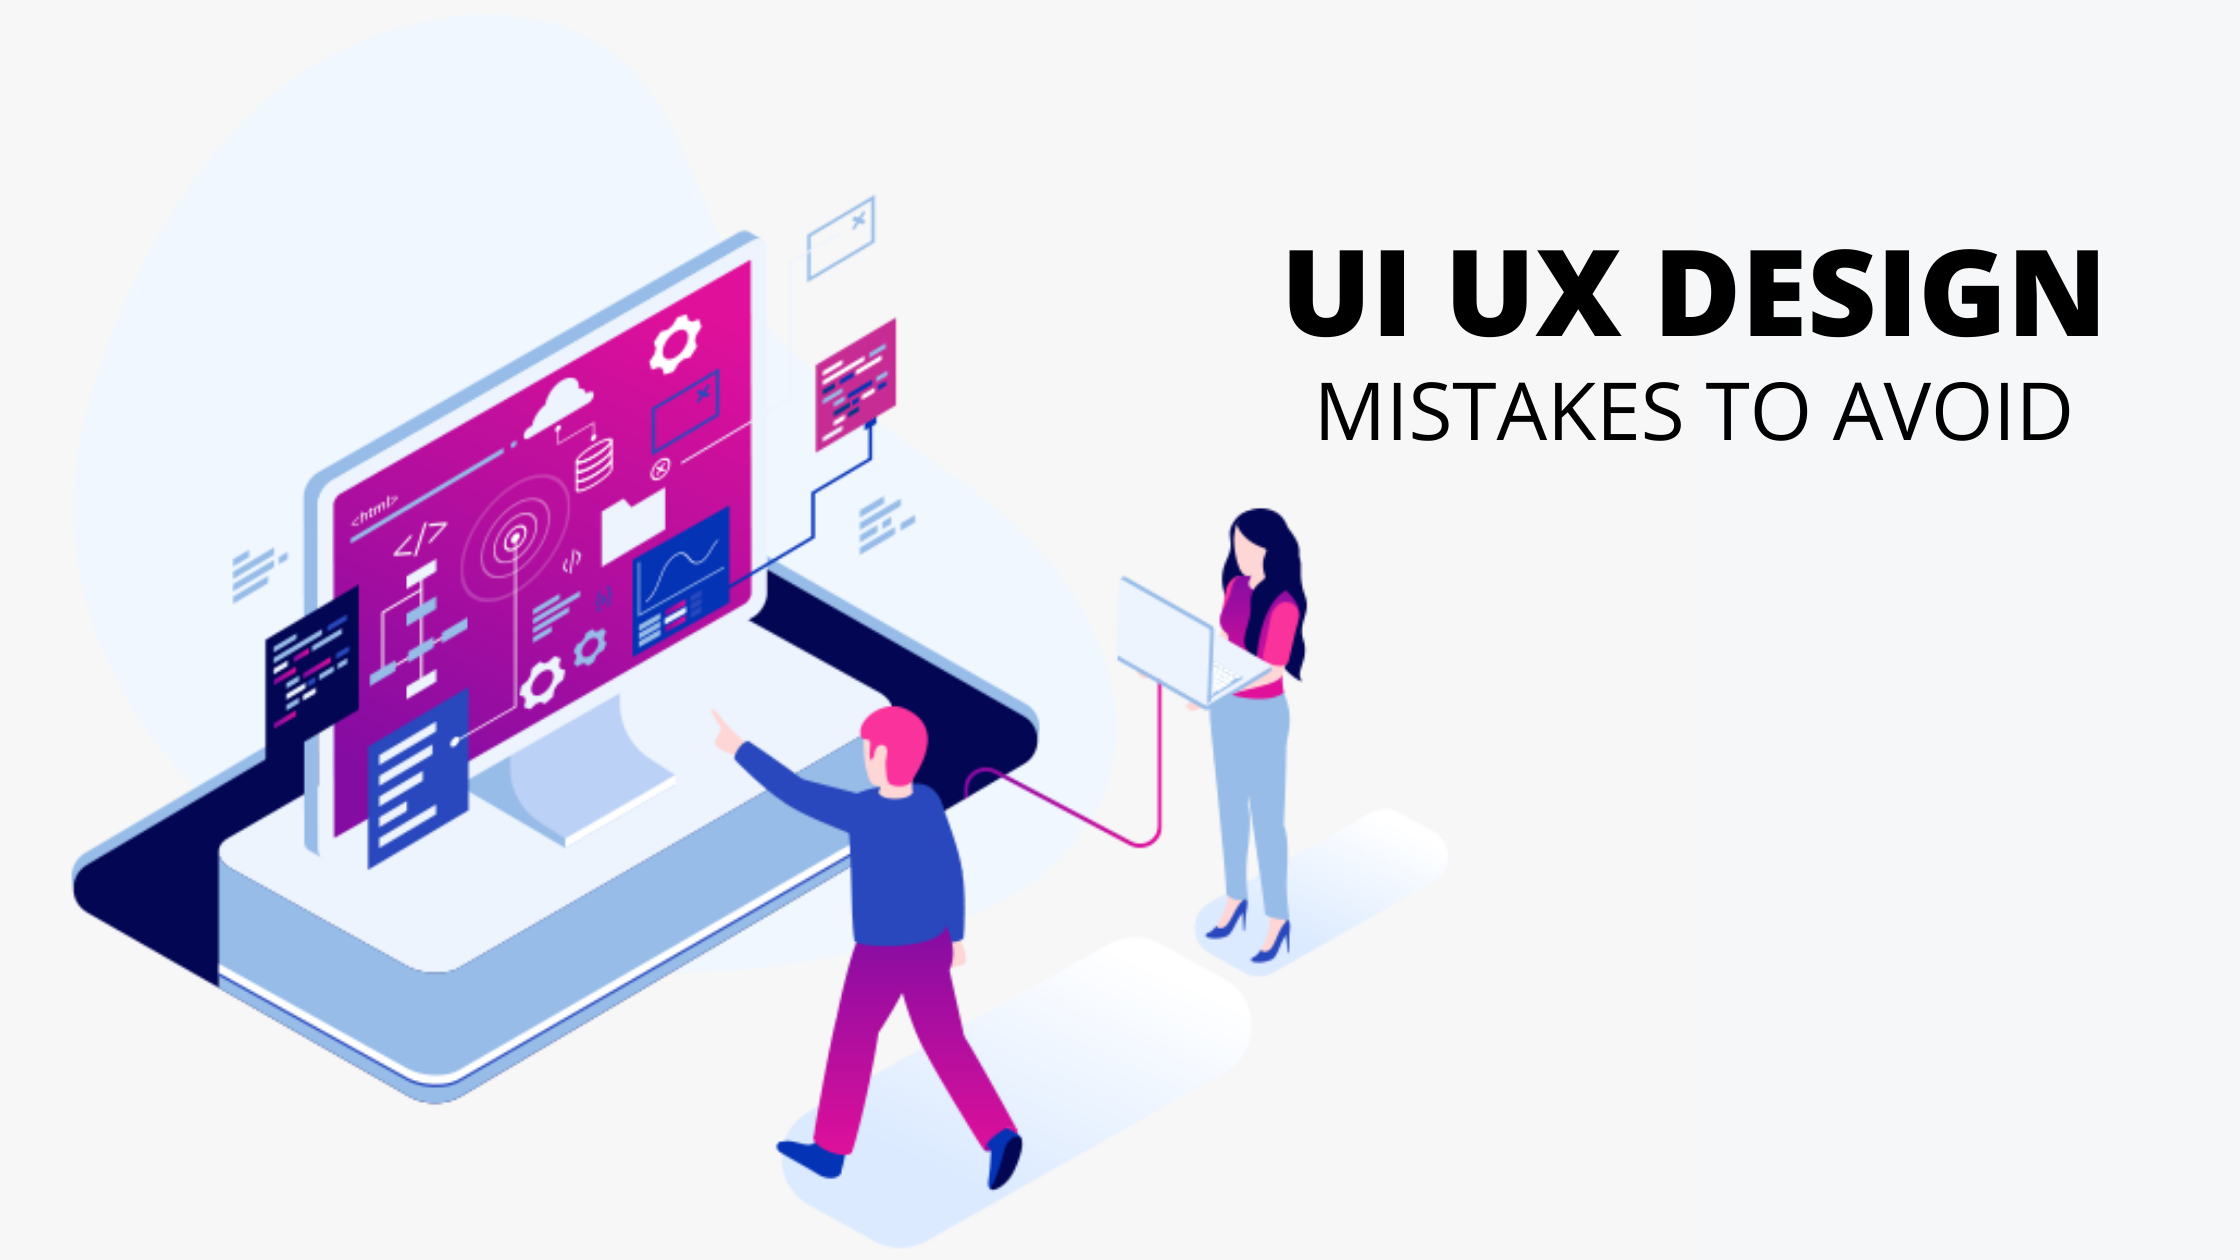 9 Common UI UX Design Mistakes to Avoid